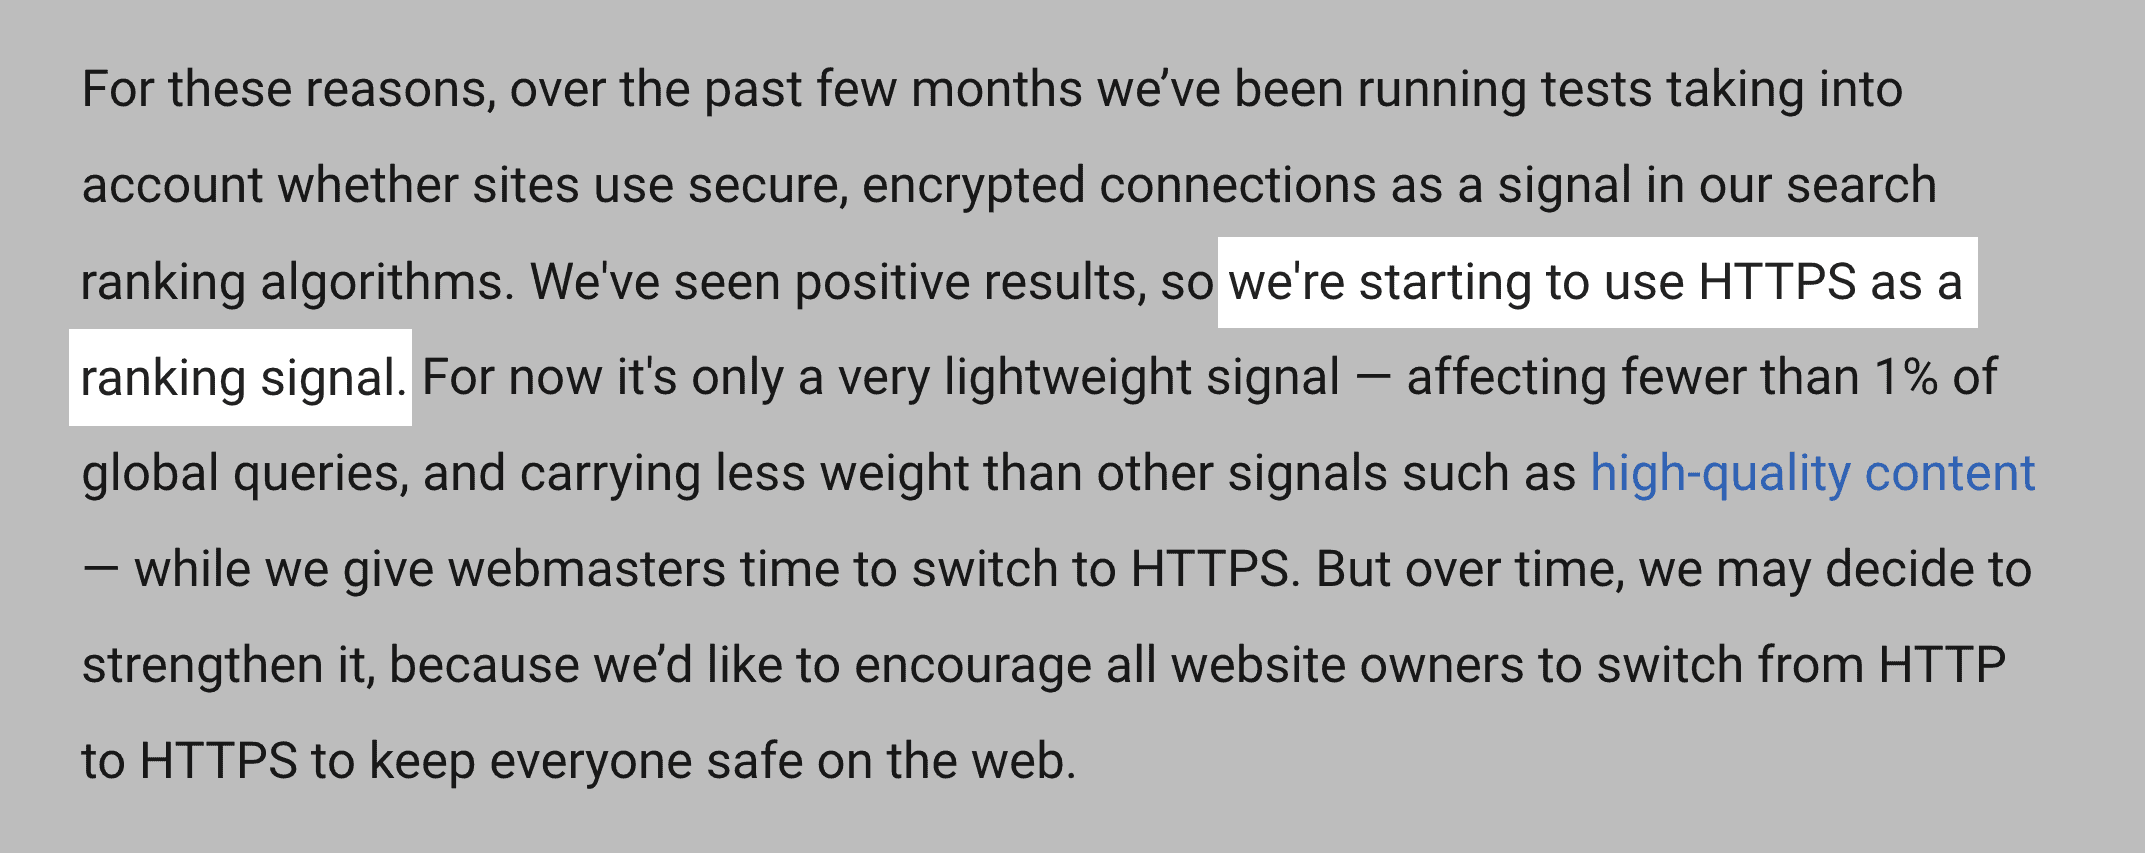 HTTPS sites have a ranking advantage